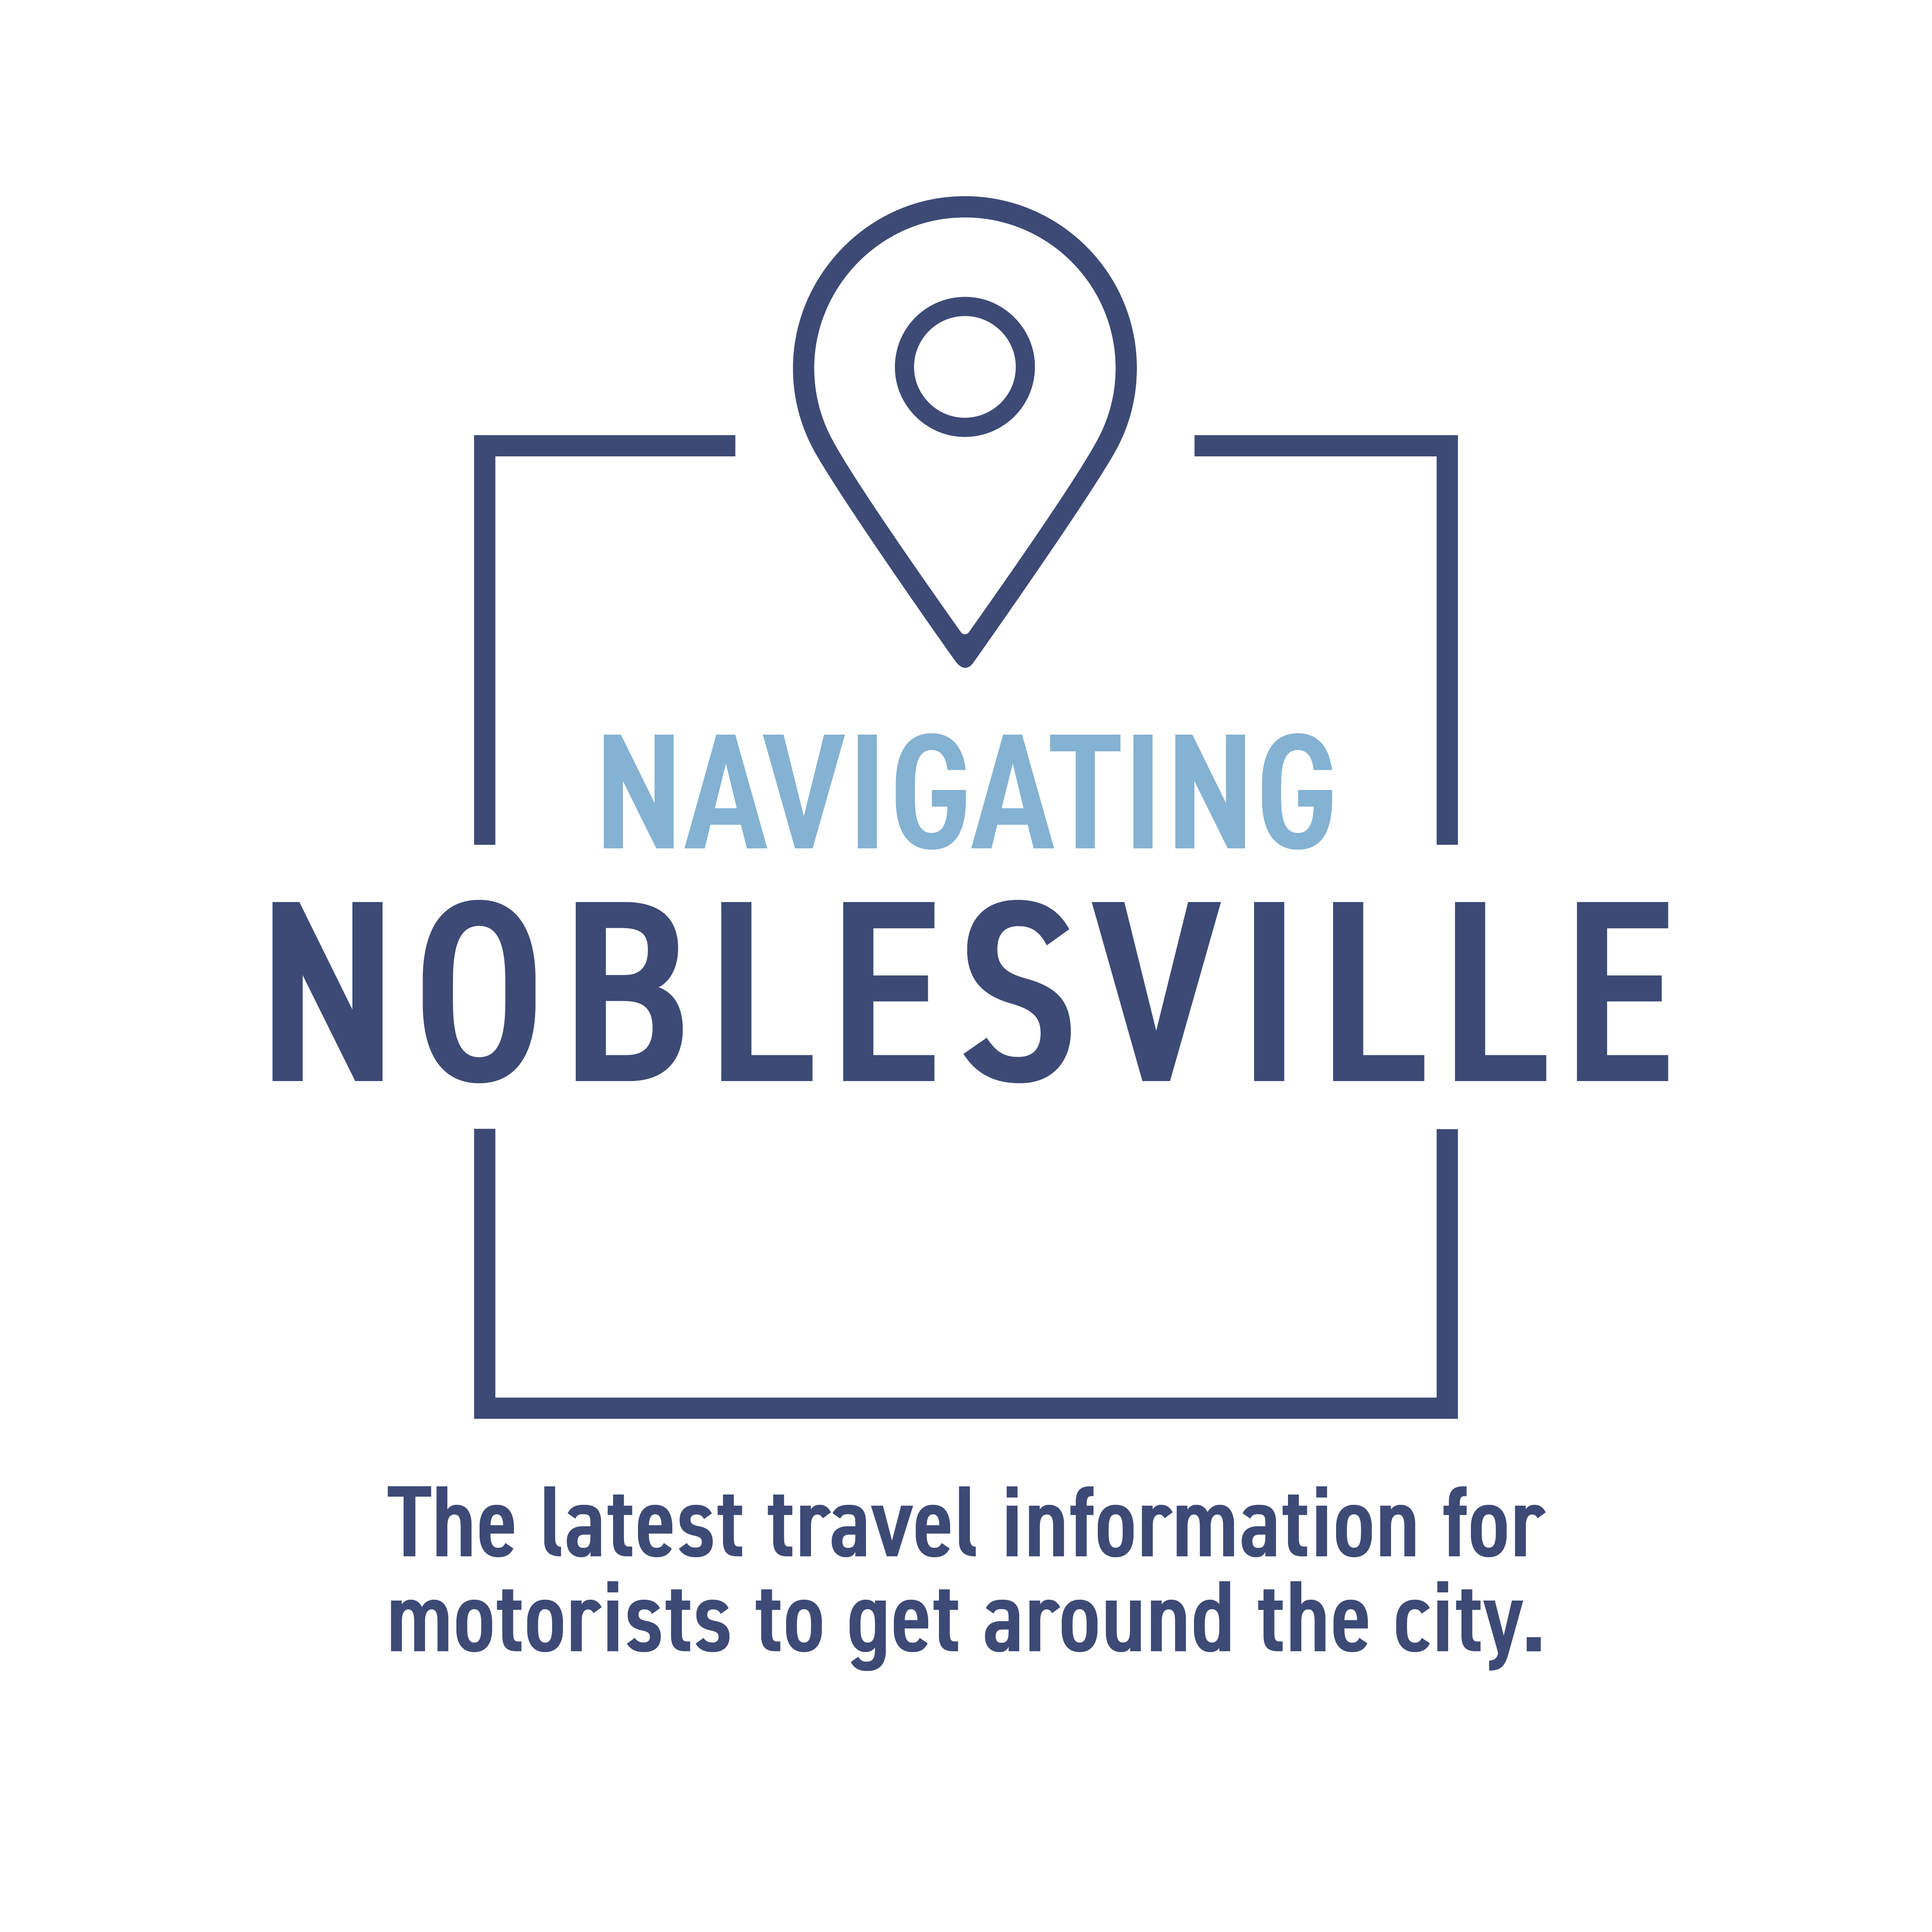 Noblesville Bicentennial